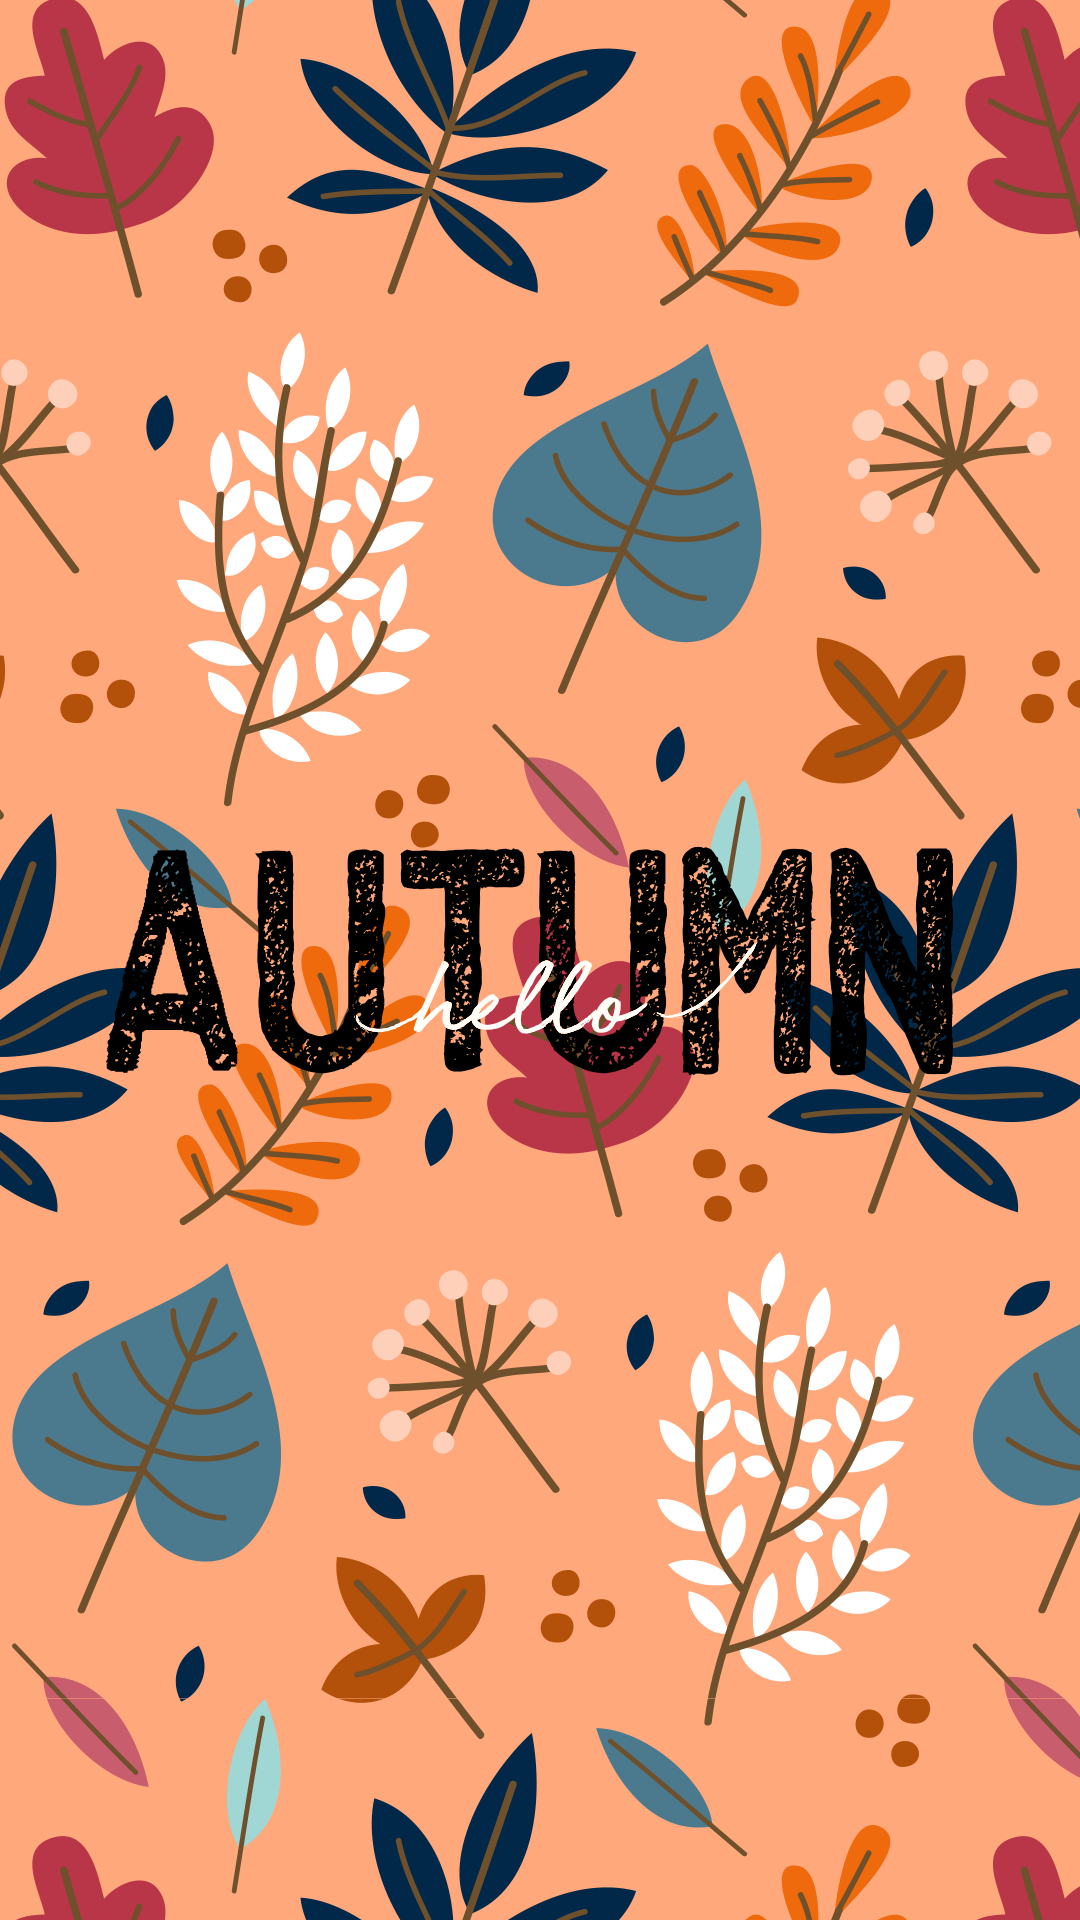 Hello Autumn! Aesthetic fall social media posts & wallpaper / lock screens ⋆ Aesthetic Design Shop